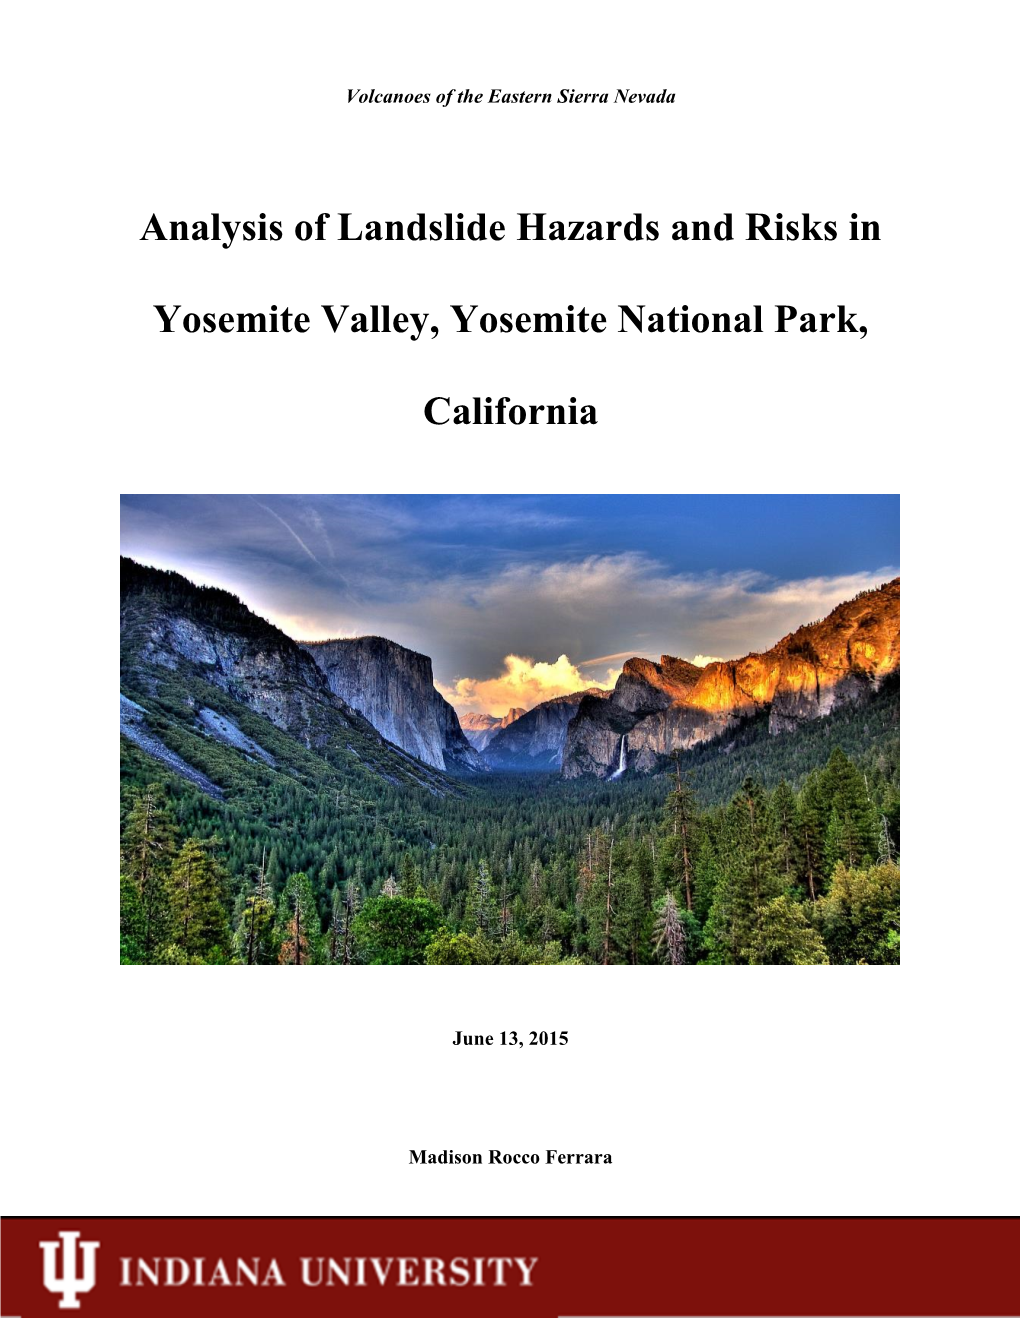 Analysis of Landslide Hazards and Risks in Yosemite Valley, Yosemite